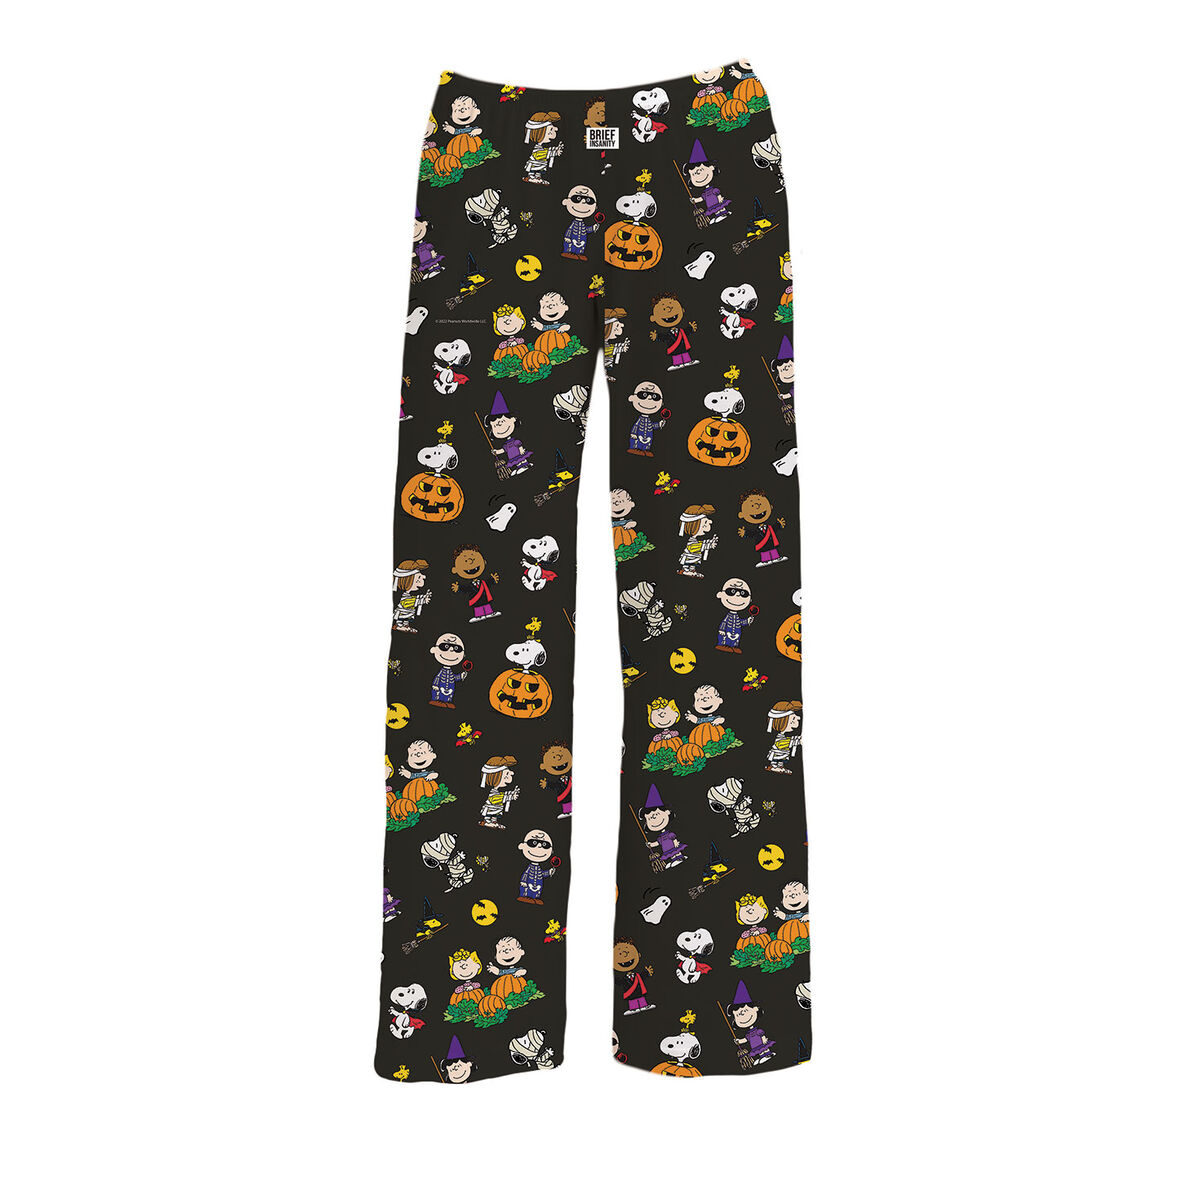 Brief Insanity Peanuts Black Halloween Lounge Pants - Loungewear - Hallmark